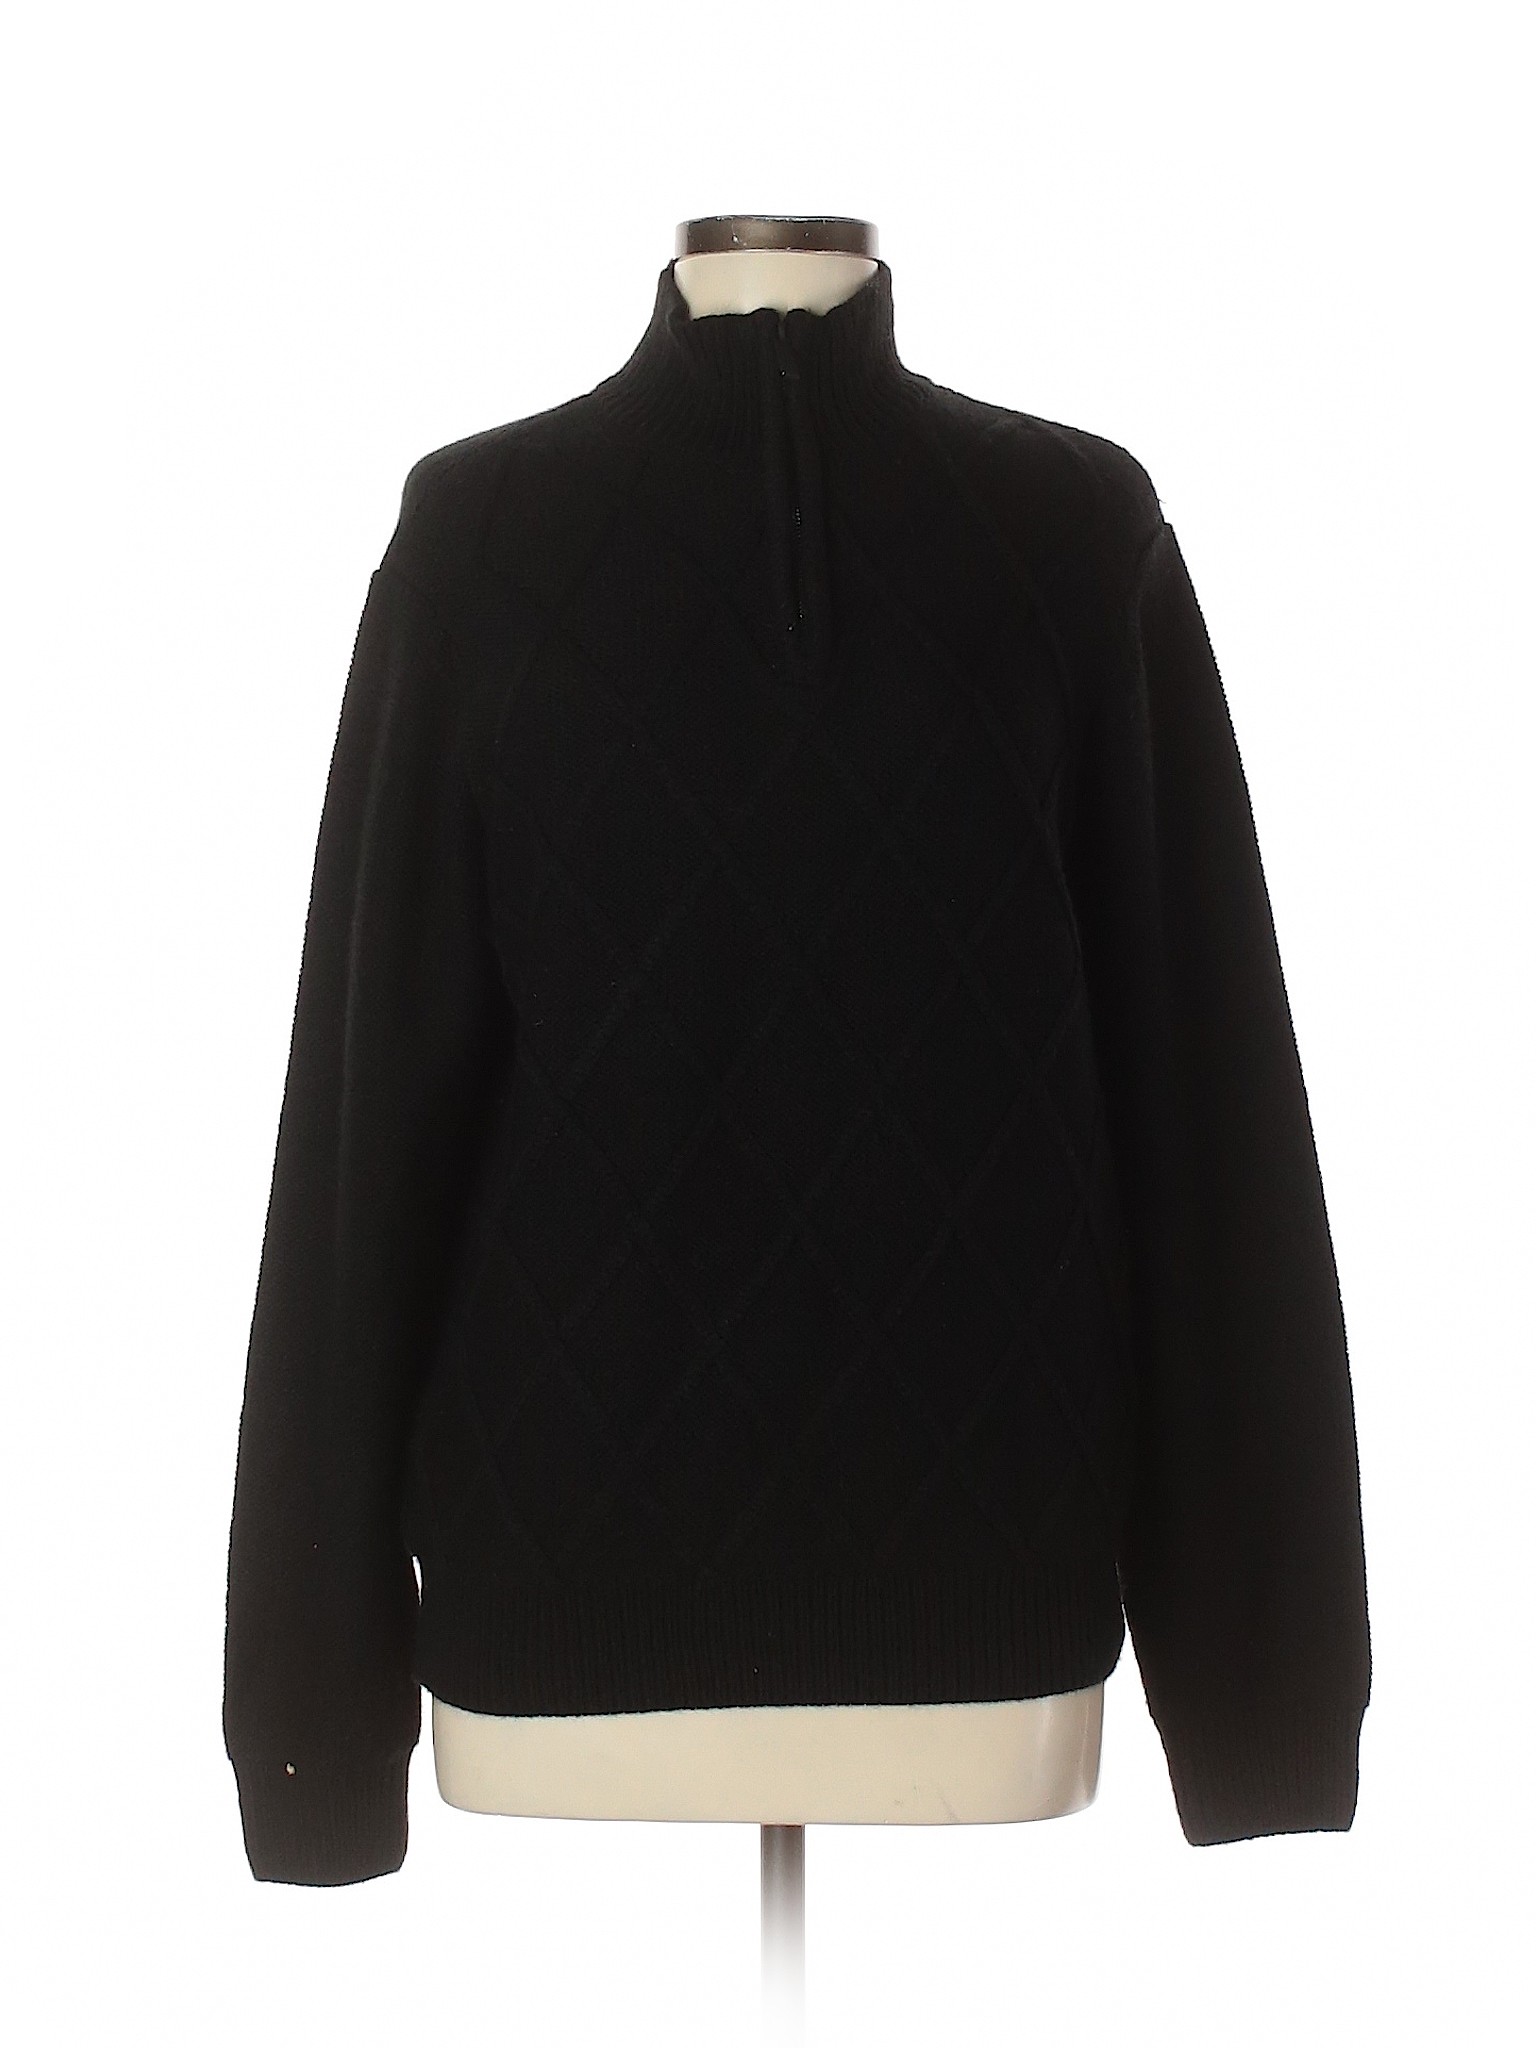 Perry Ellis Women Black Pullover Sweater M | eBay